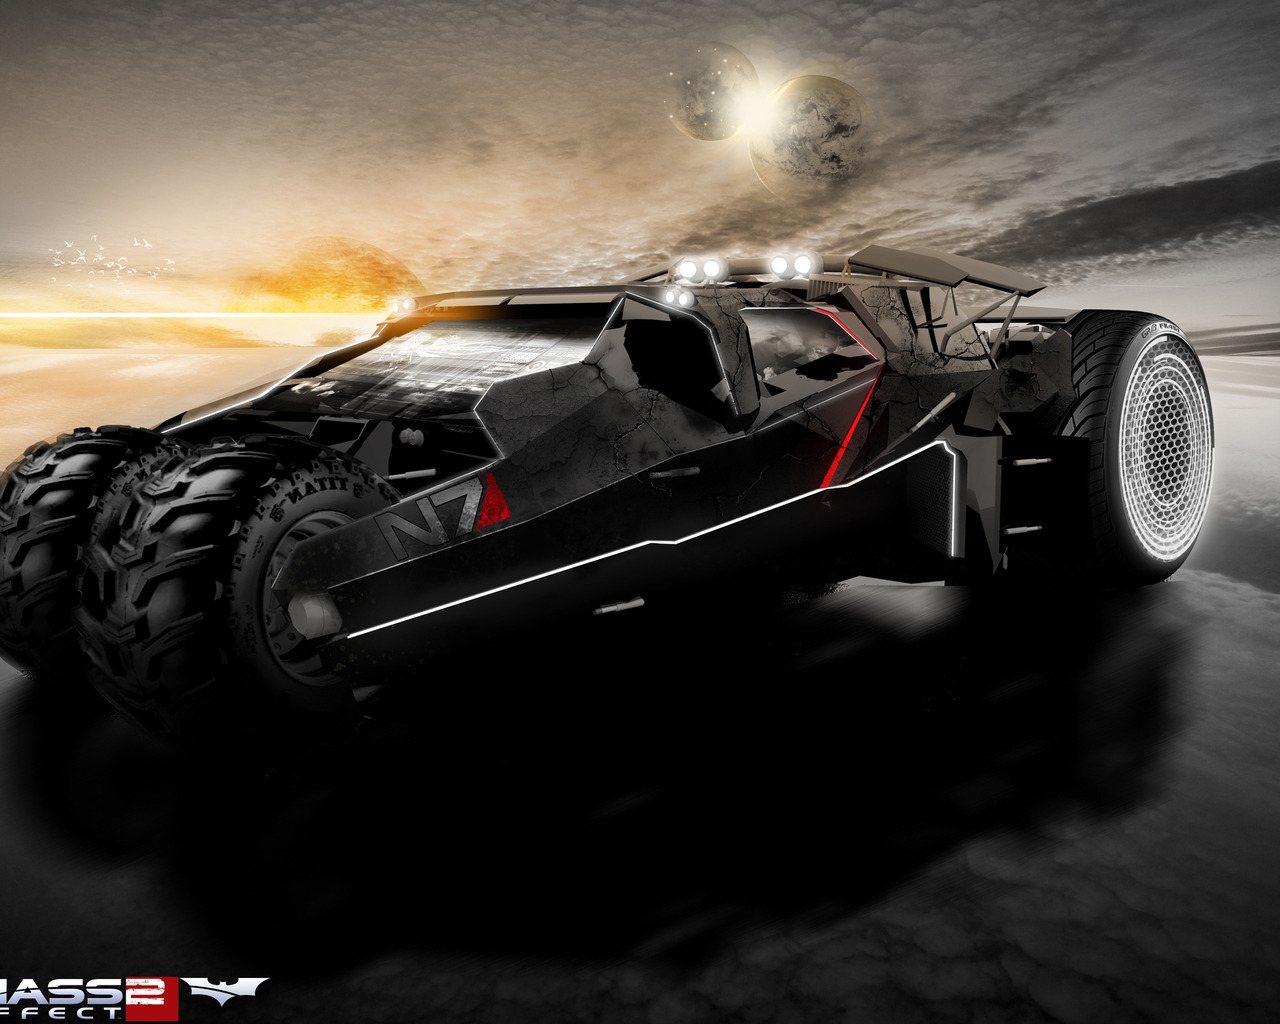 Mass Effect 2 Car for 1280 x 1024 resolution